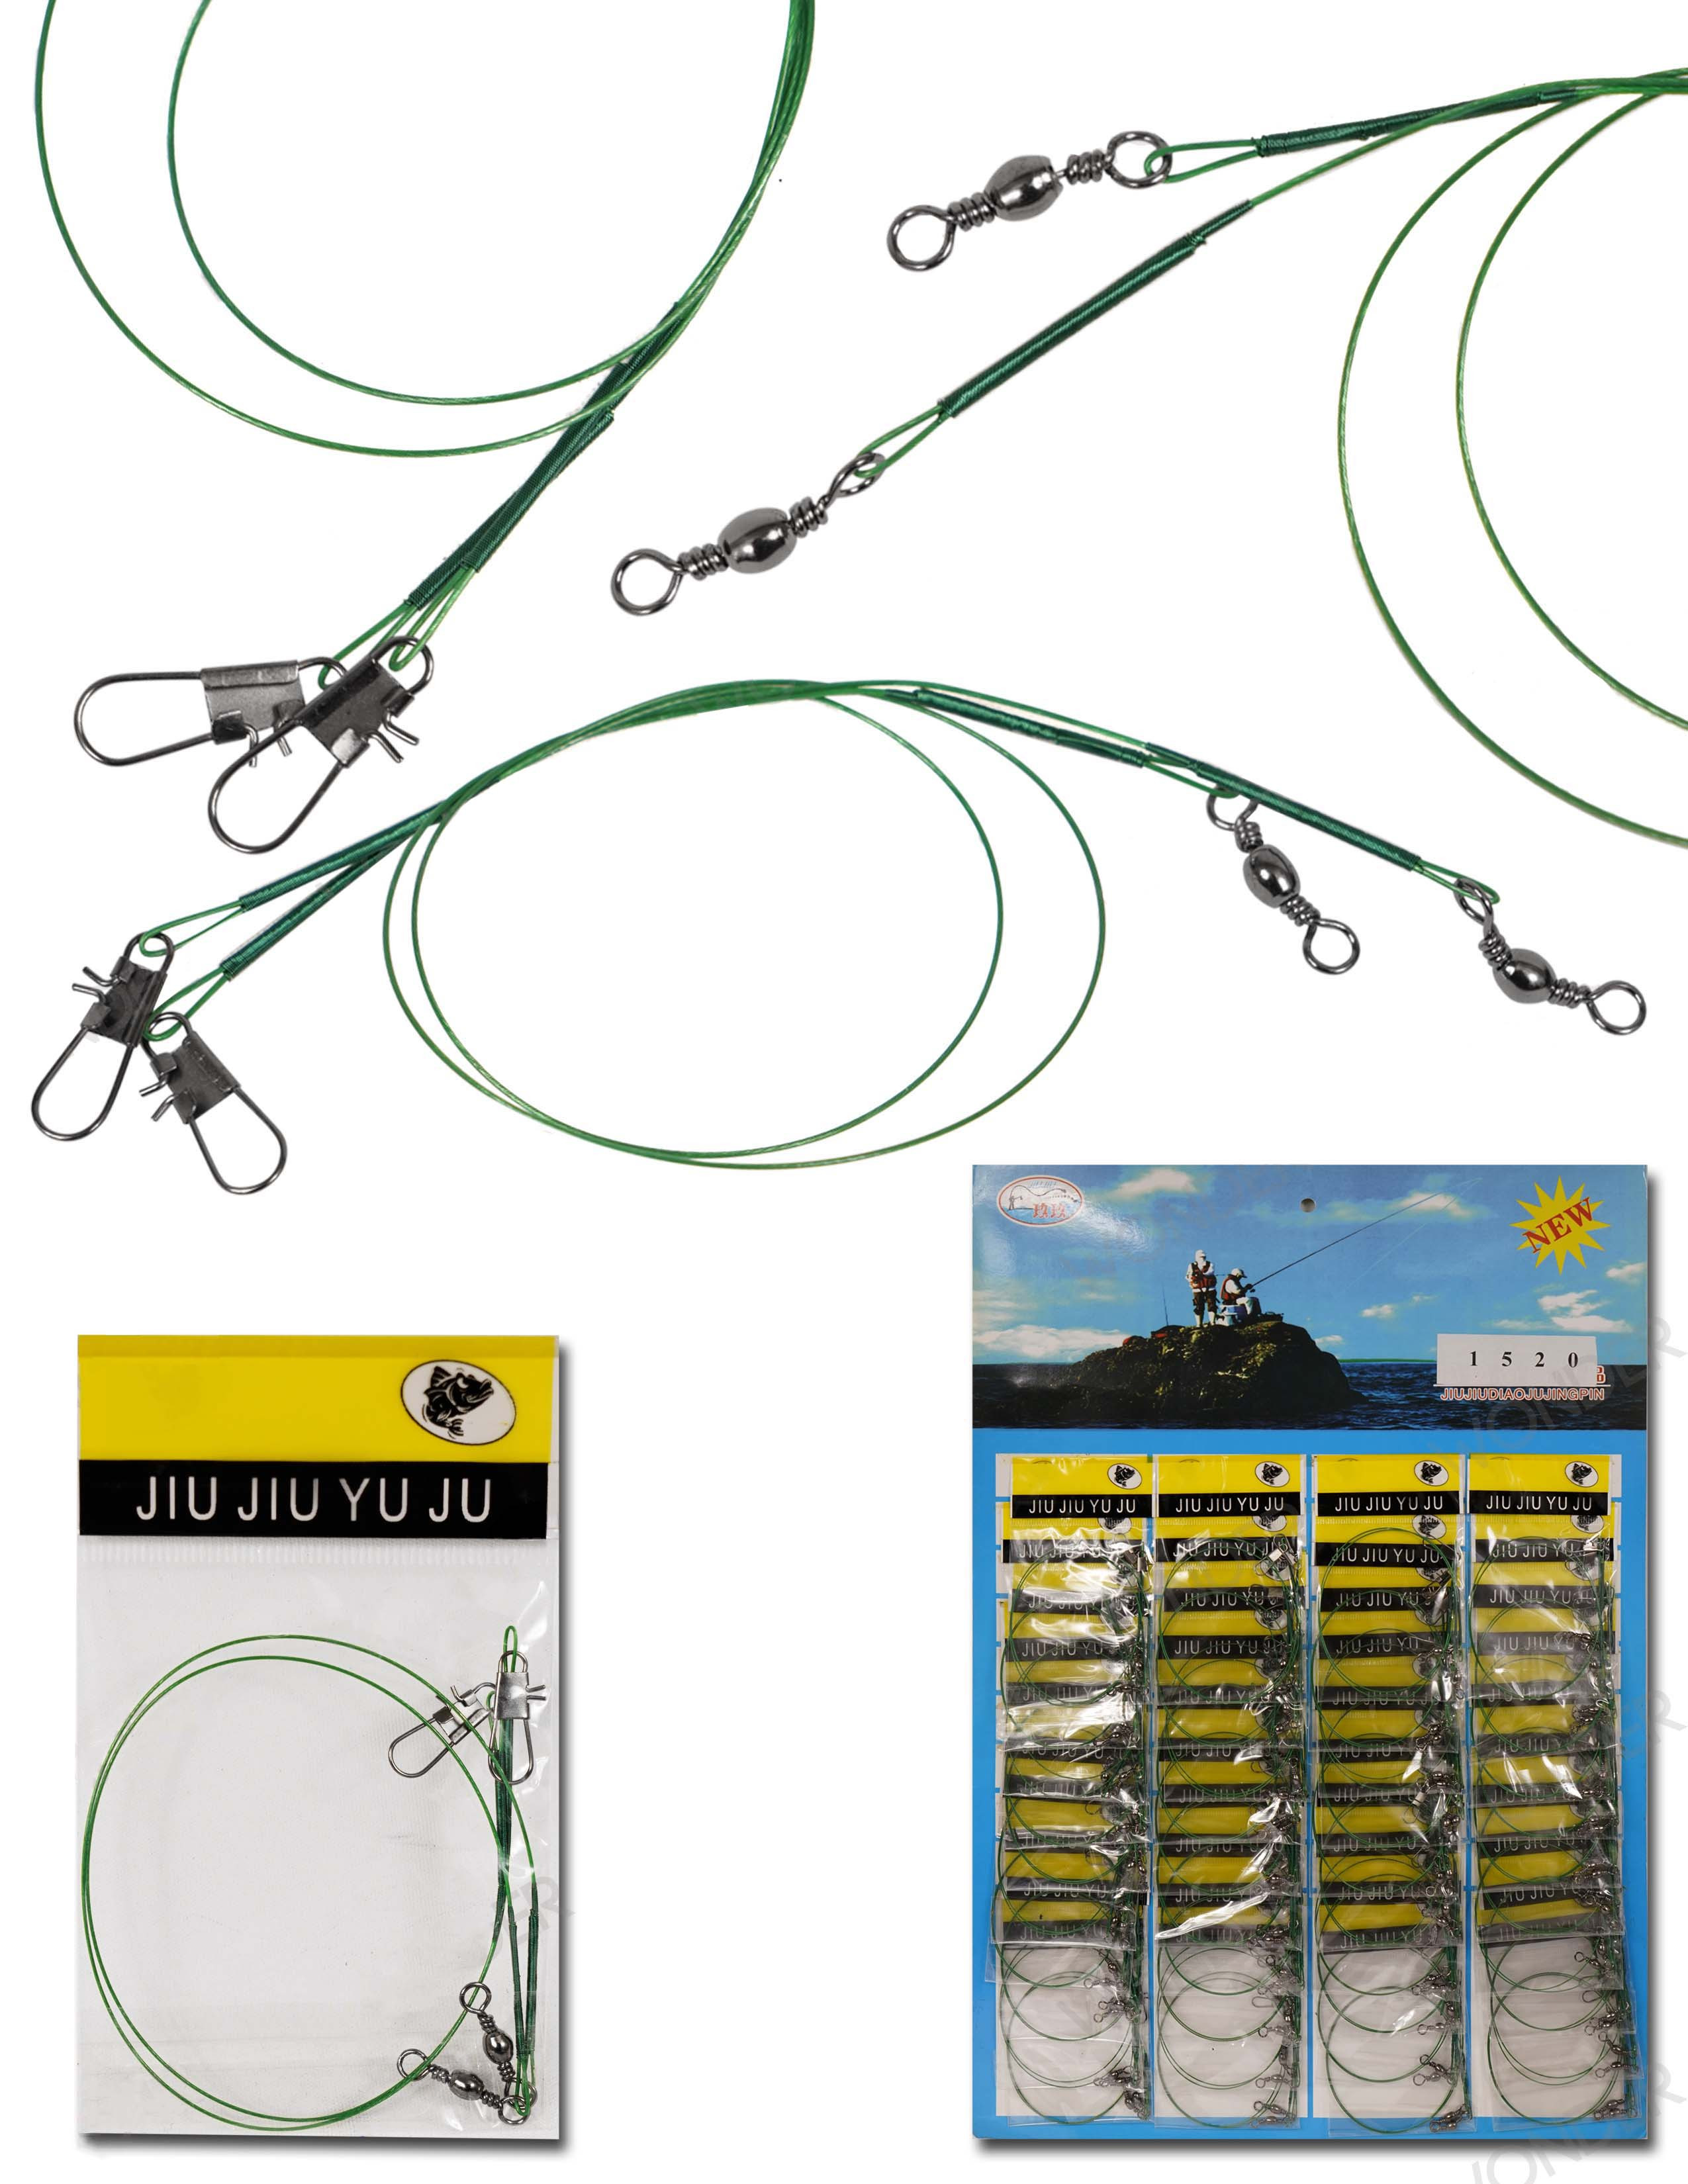 Imagen Lider Cable de Linea Para pesca x 40 Unidades